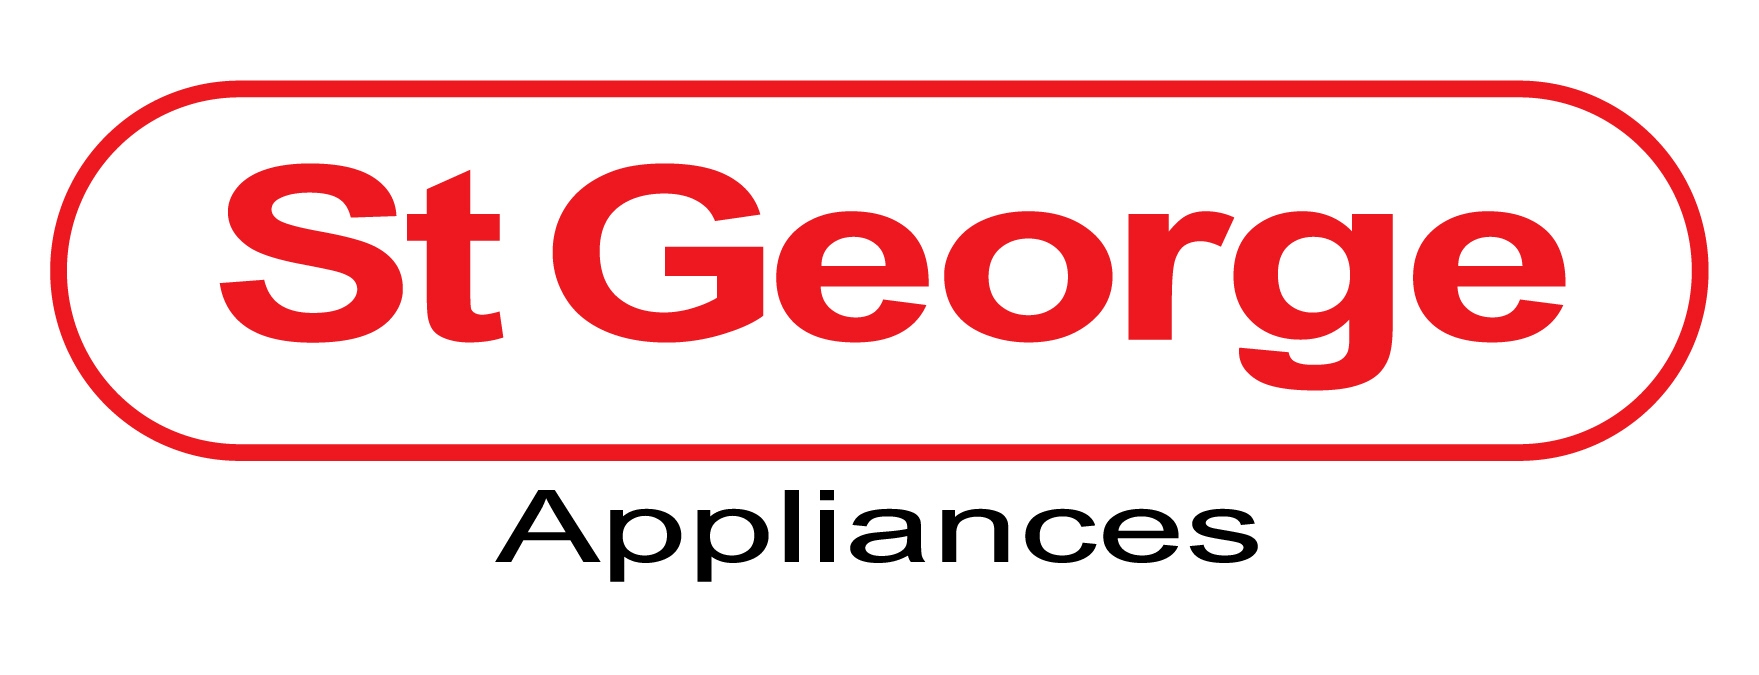 St George Appliances